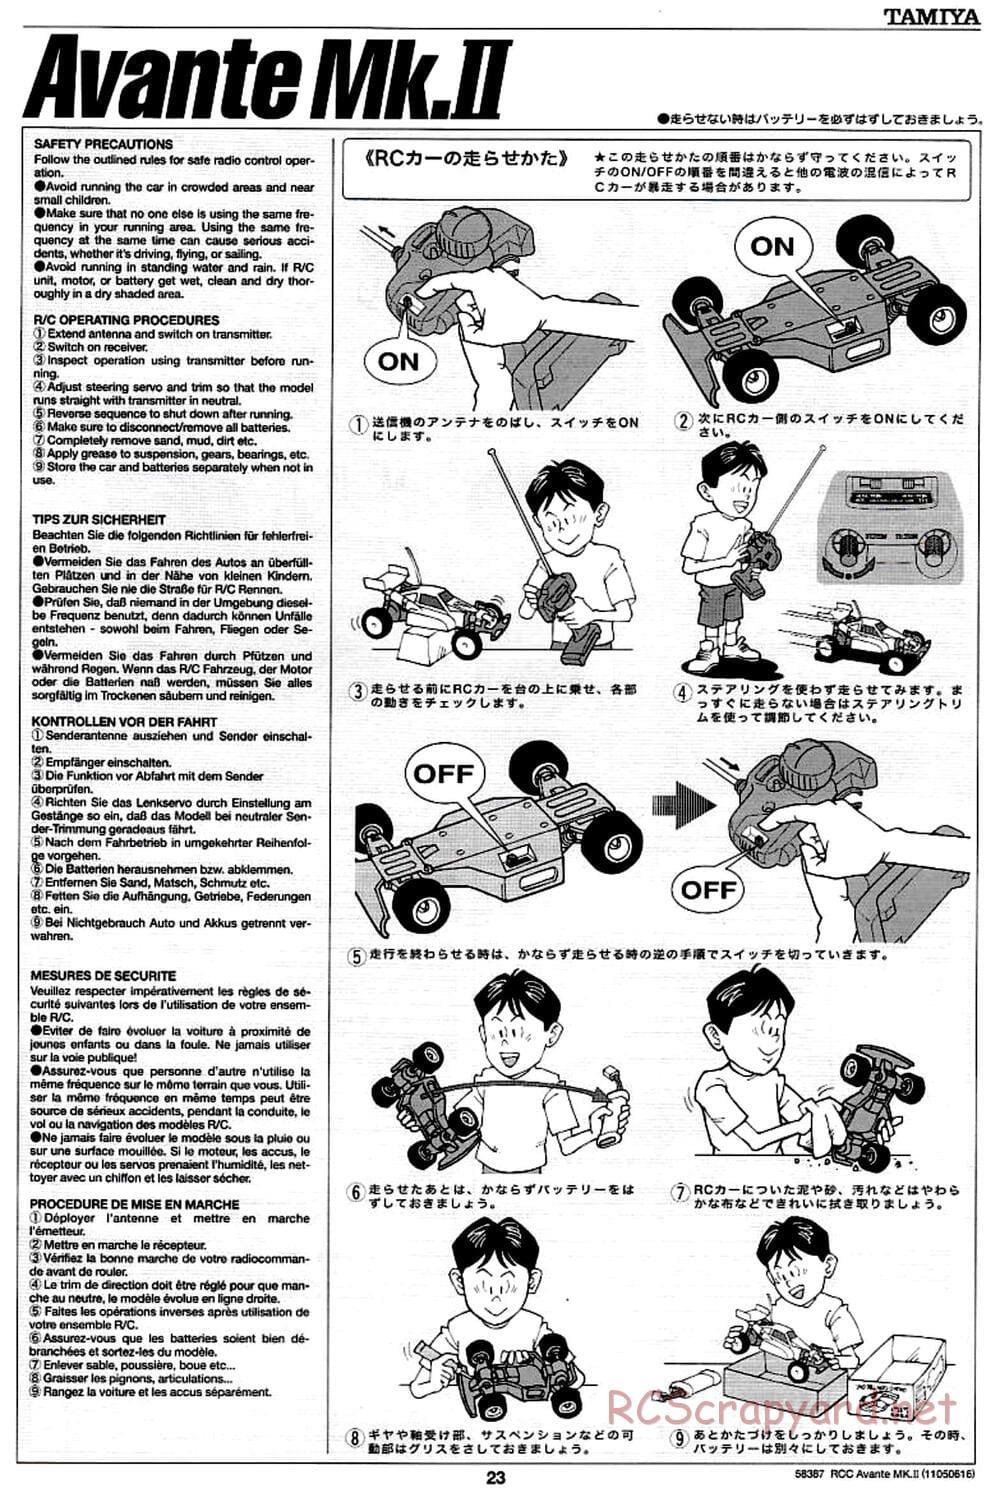 Tamiya - Avante Mk.II Chassis - Manual - Page 23